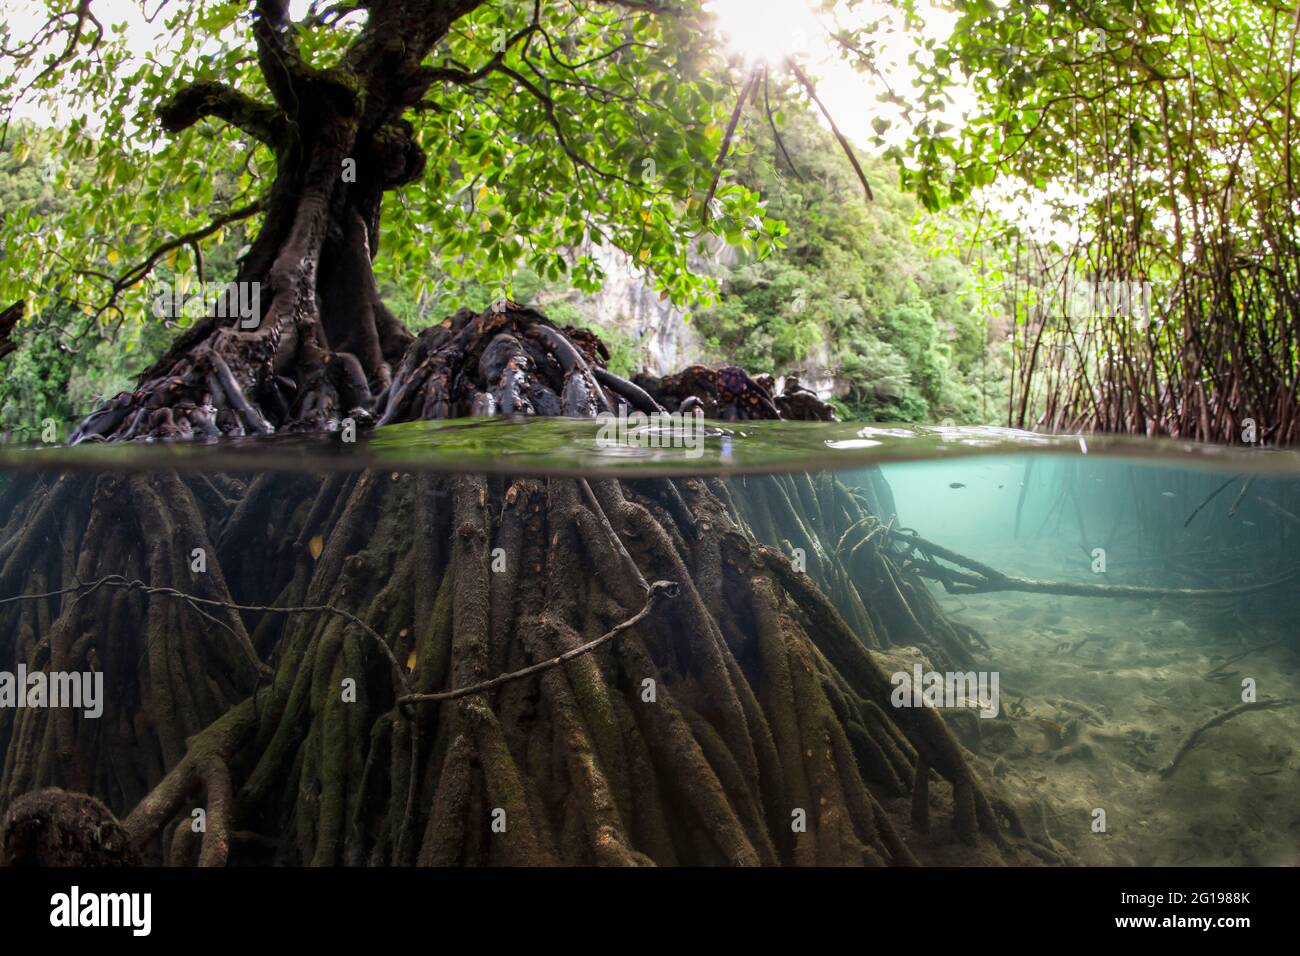 Risong Bay Mangroves, Risong Bay, Micronesia, Palau Stock Photo